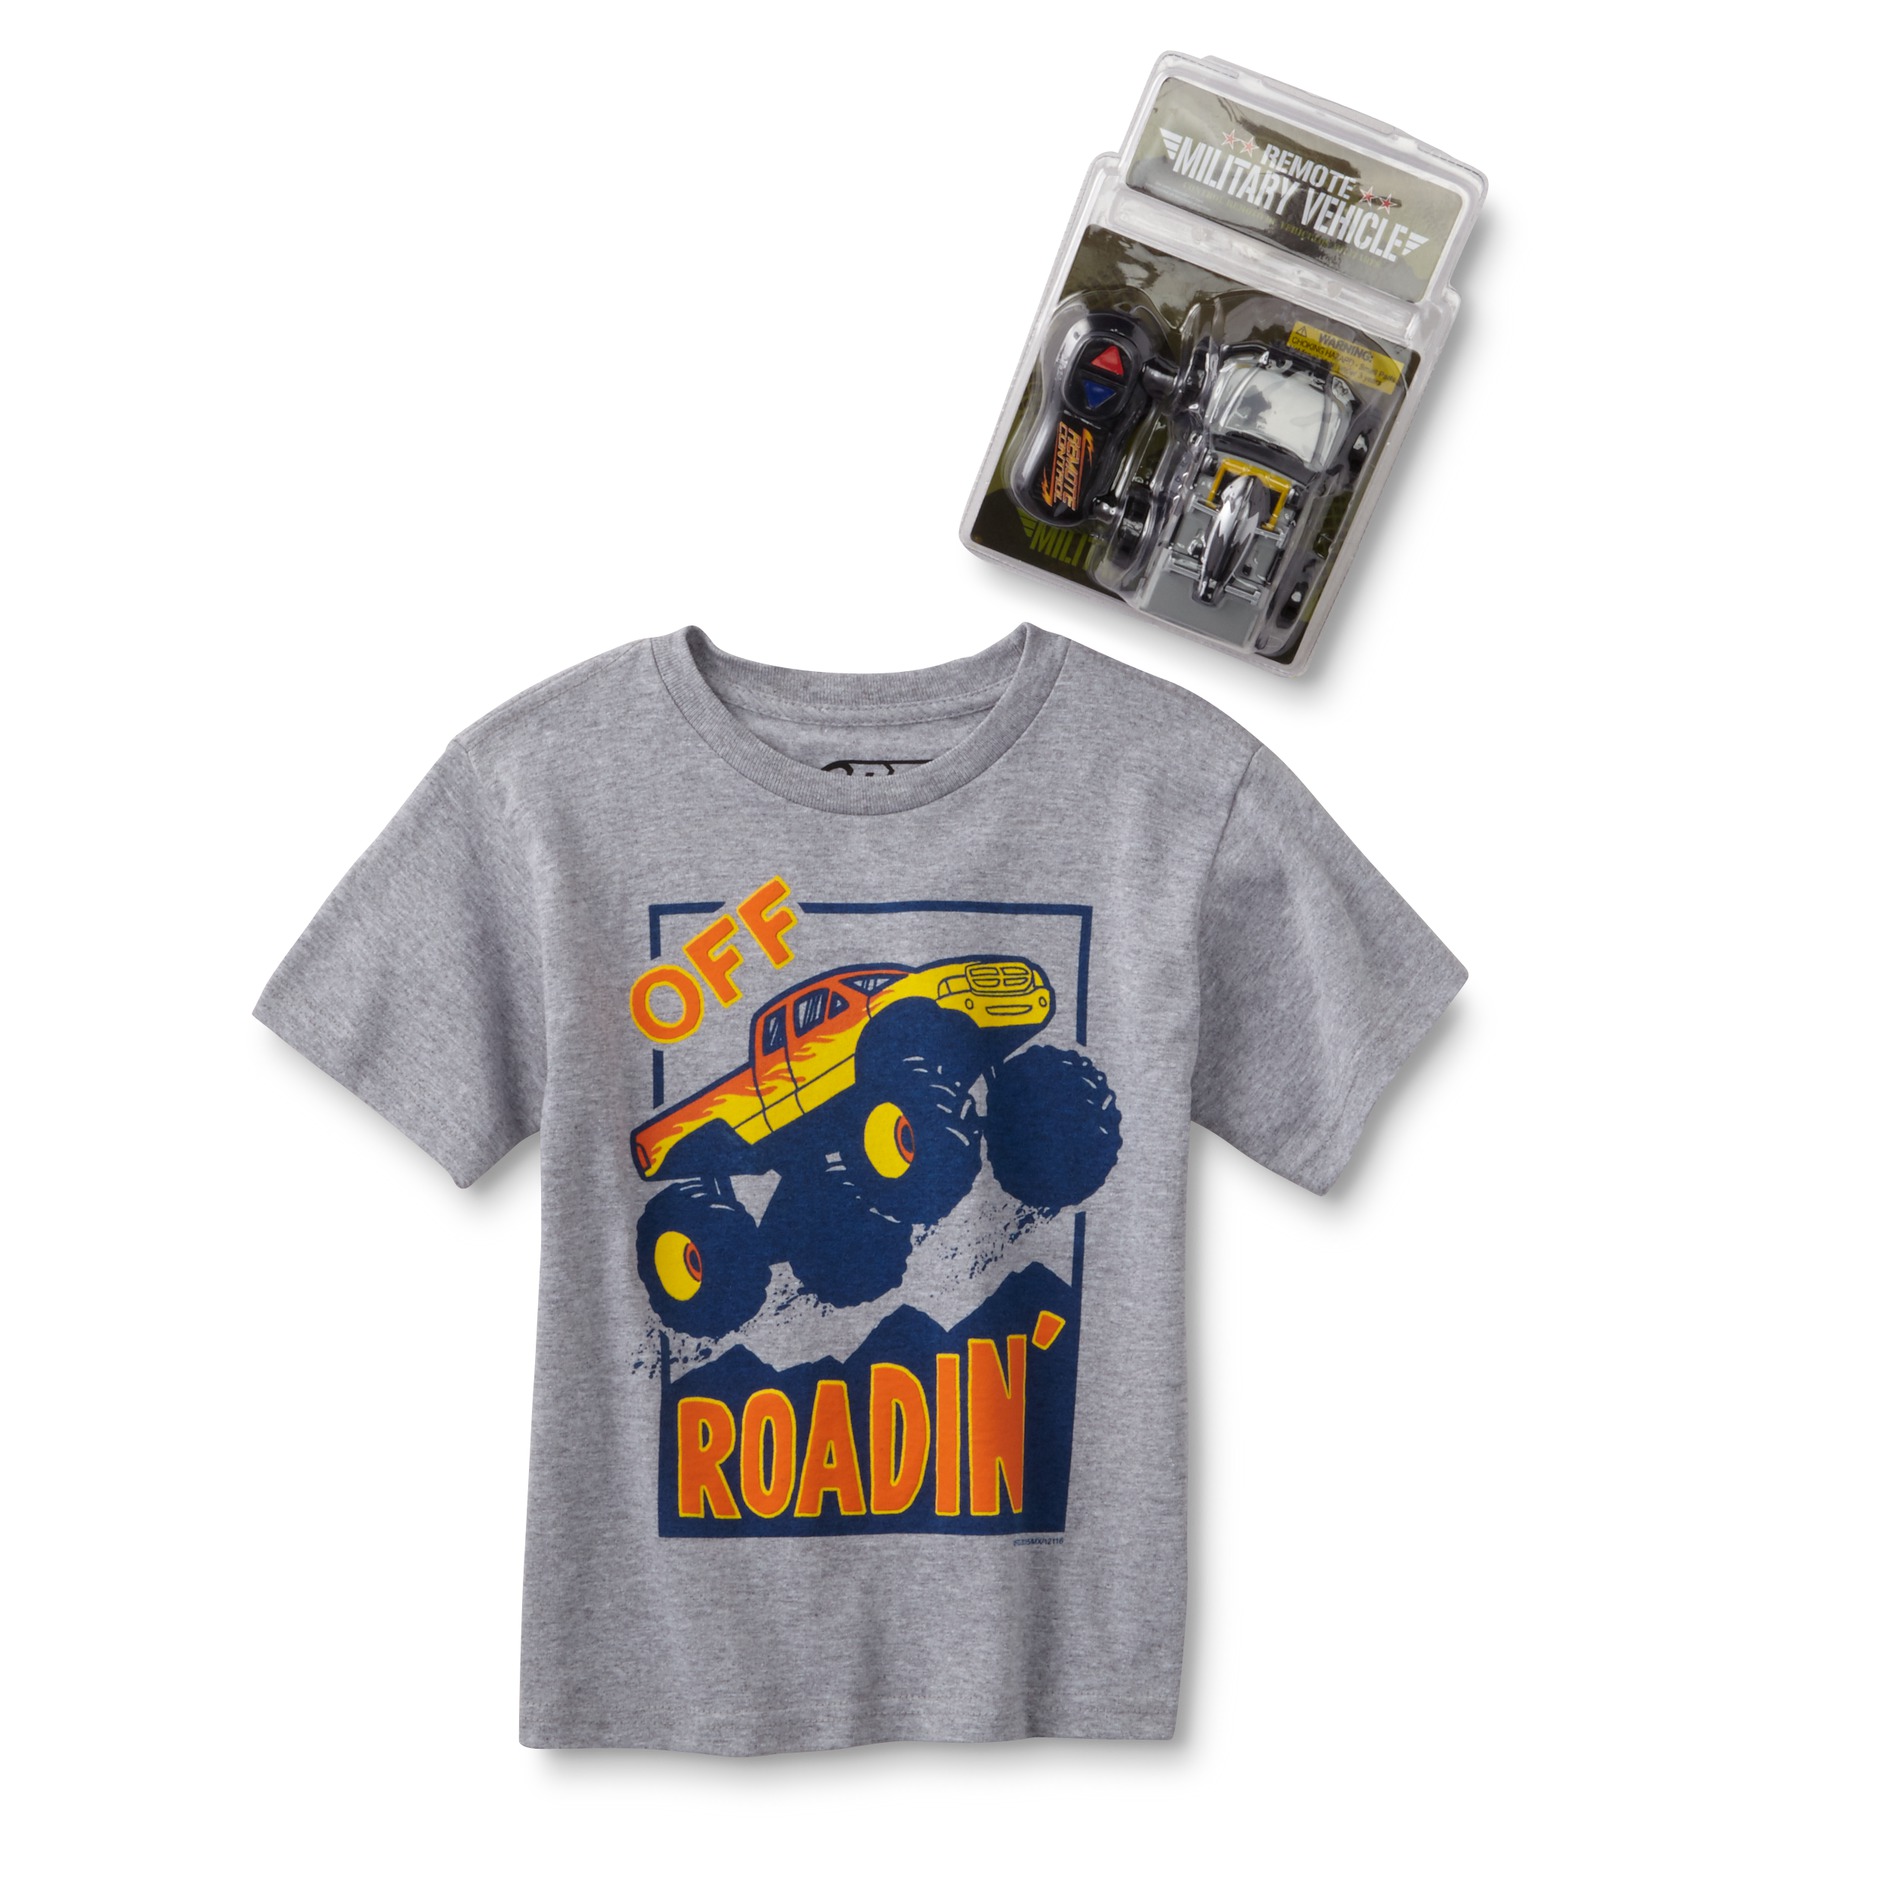 BURPEE Boy's Graphic T-Shirt & Toy - Off Roadin'